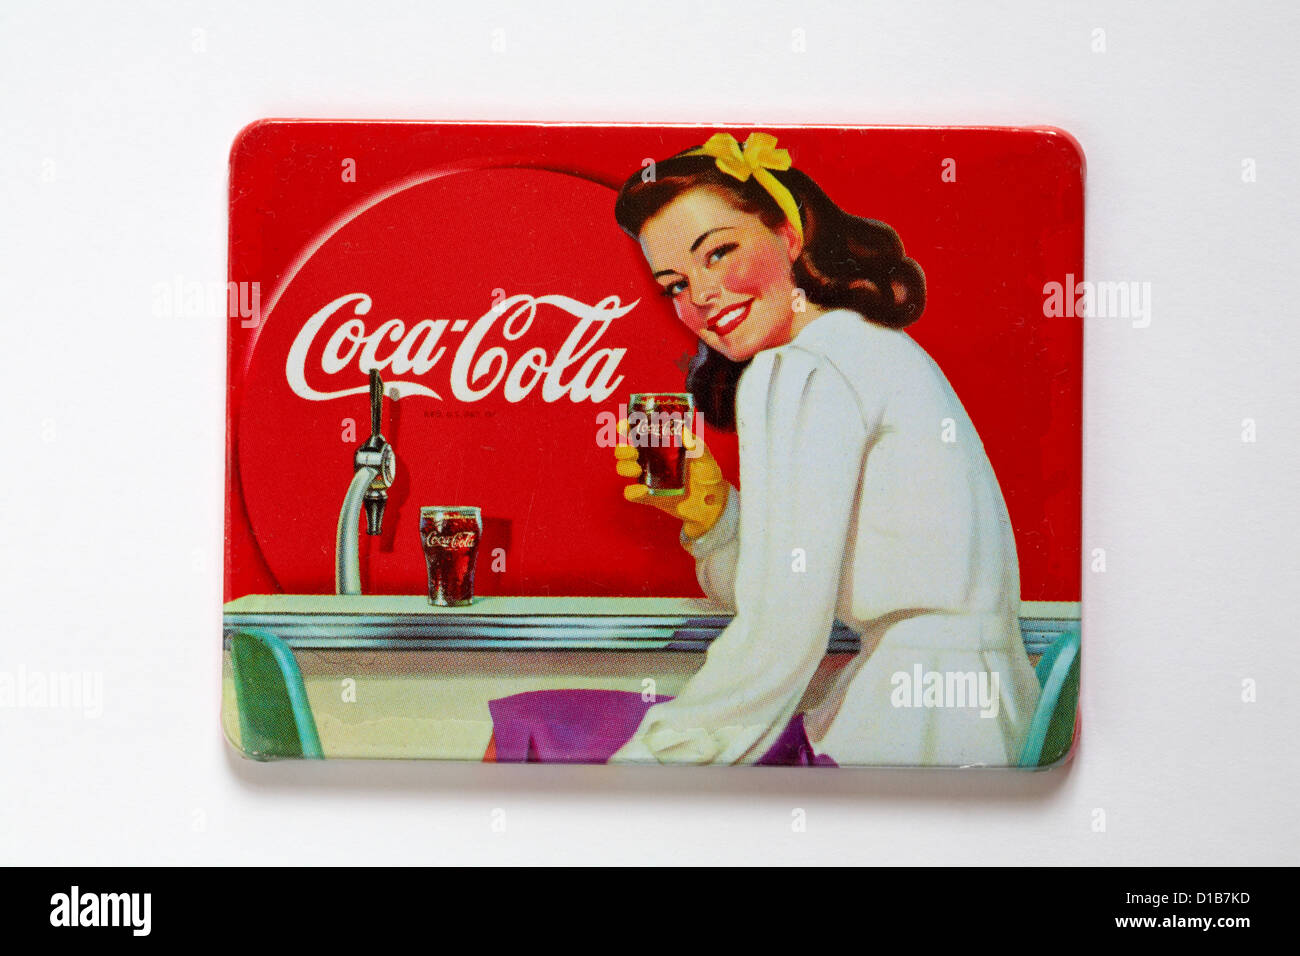 USA Coca Cola Snack Sandwich Snack Metal Advertising Sales Poster